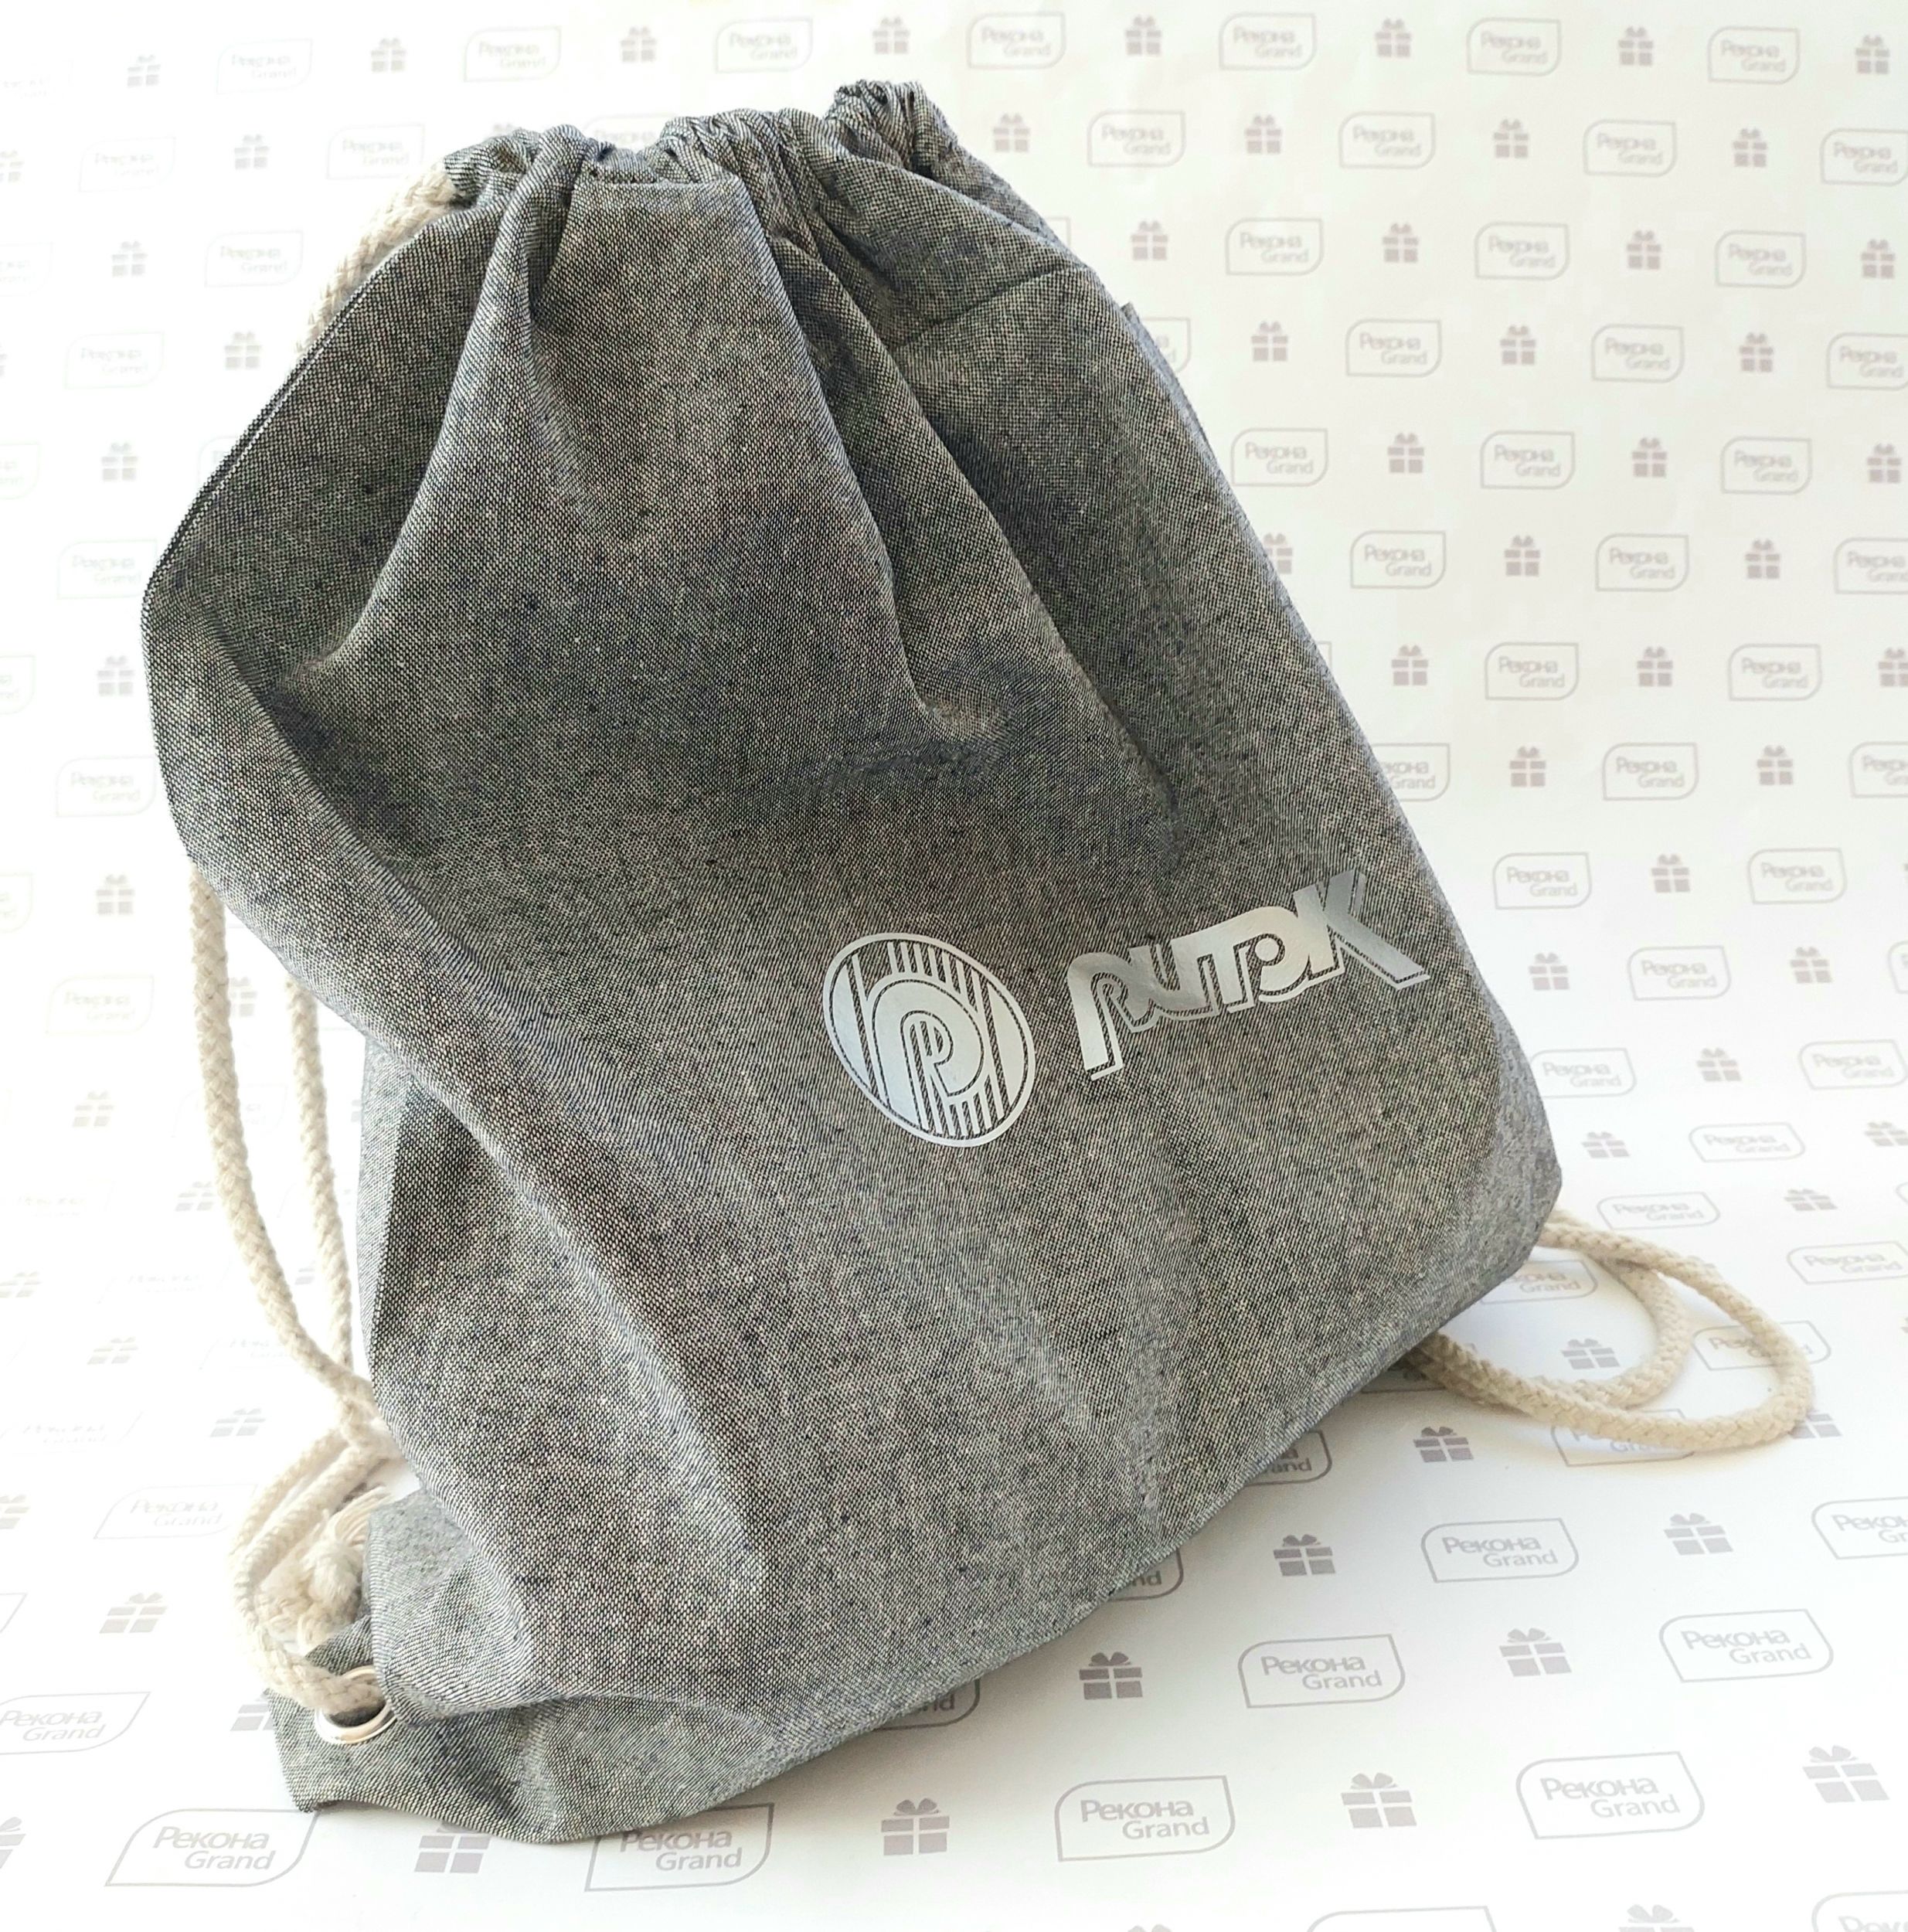 эко сумки с логотипом